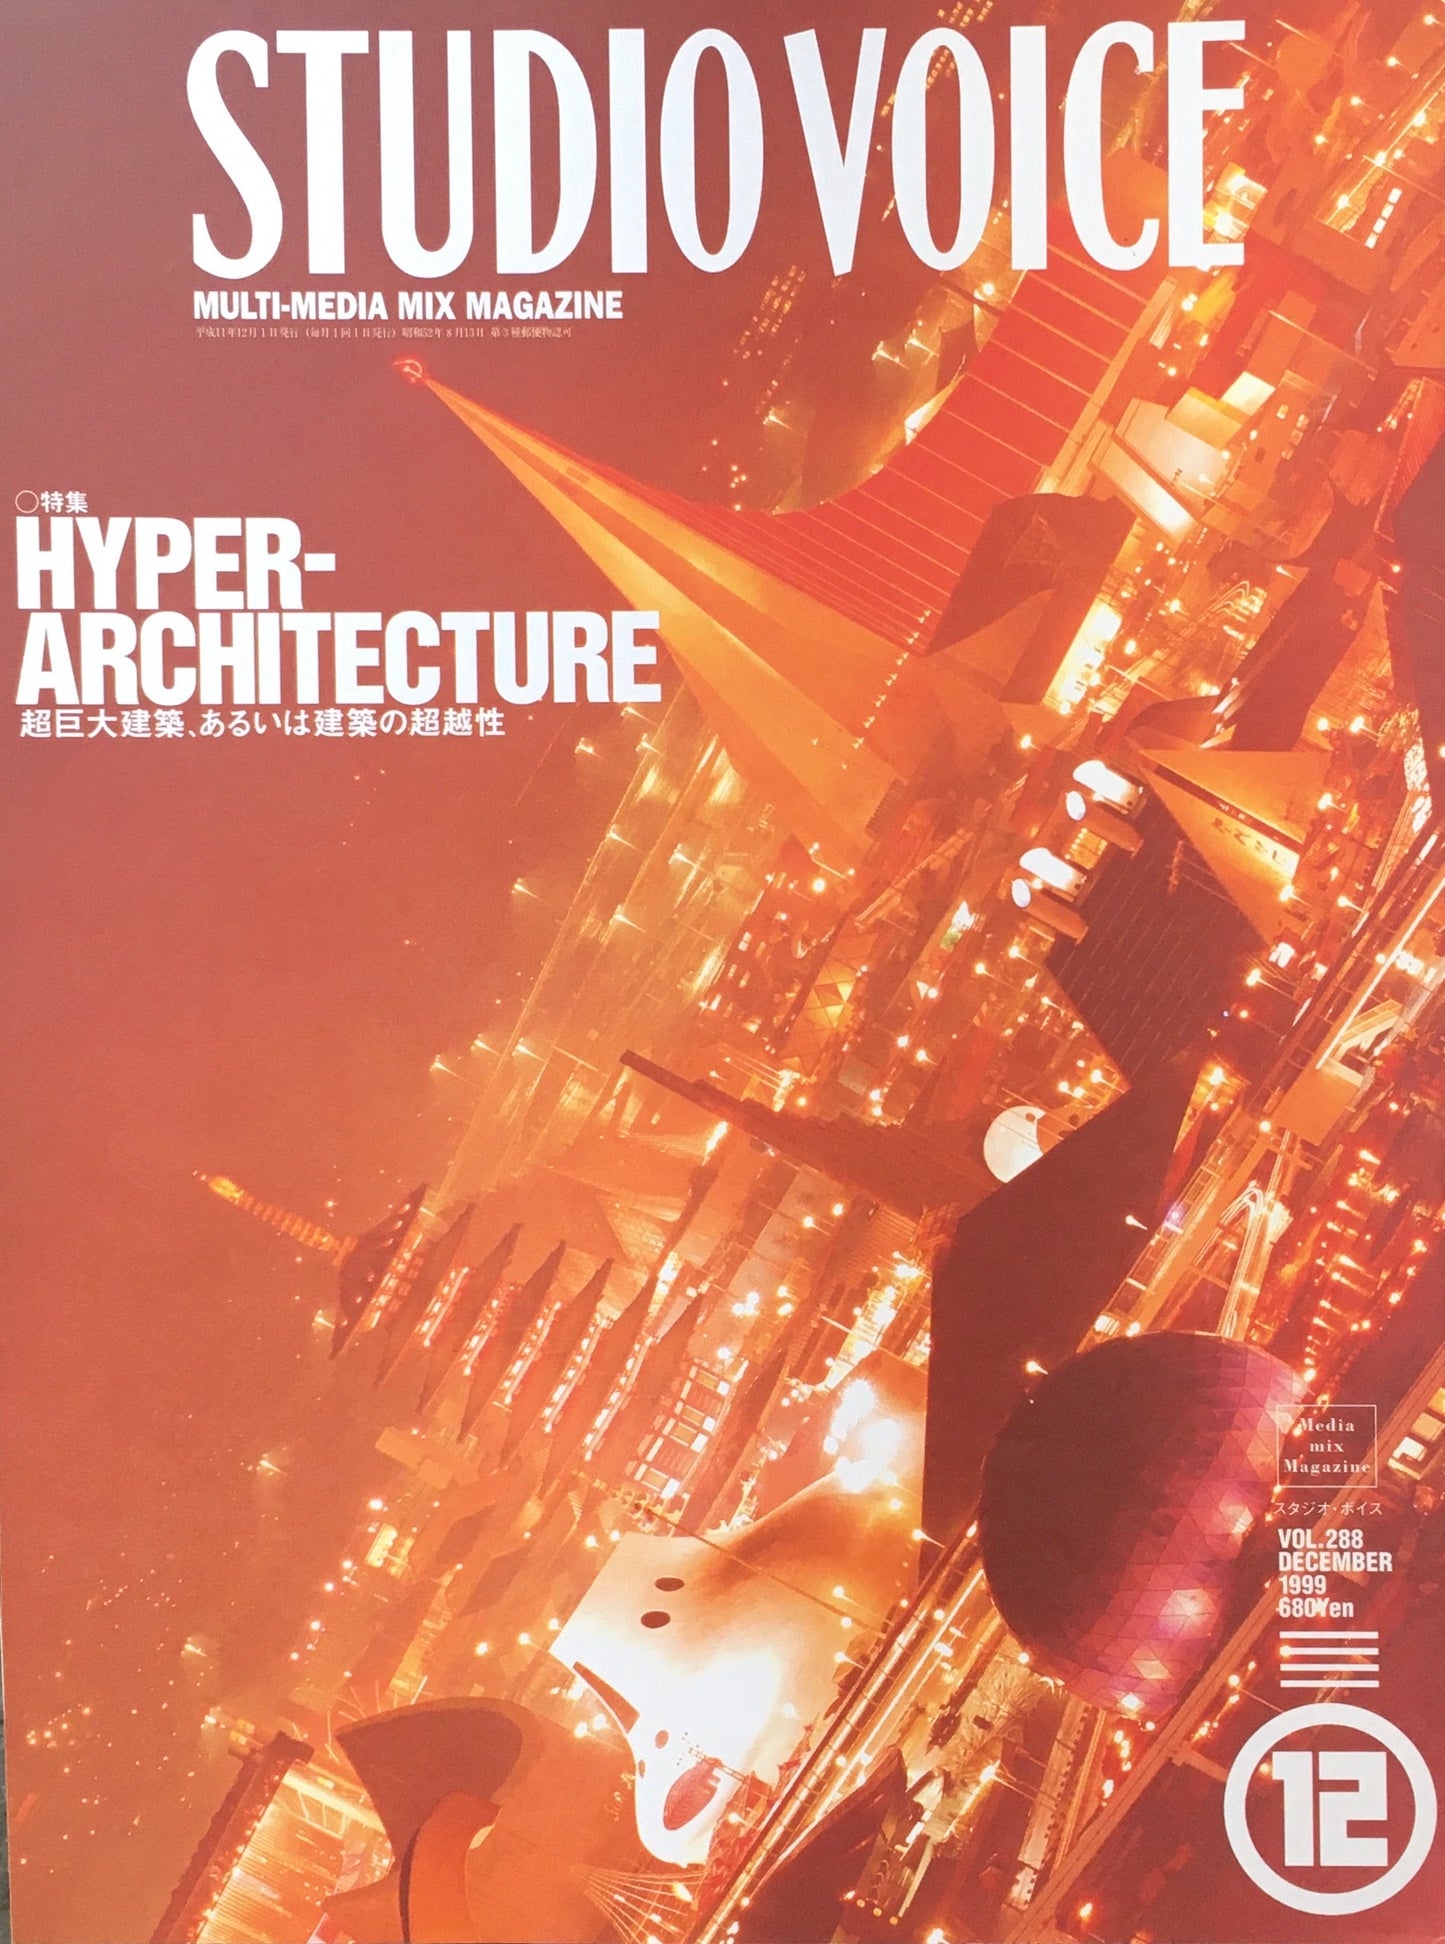 STUDIO VOICE　スタジオ・ボイス　Vol.288　1999年12月号　特集　HYPER-ARCHITECTURE　超巨大建築、あるいは建築の超越性